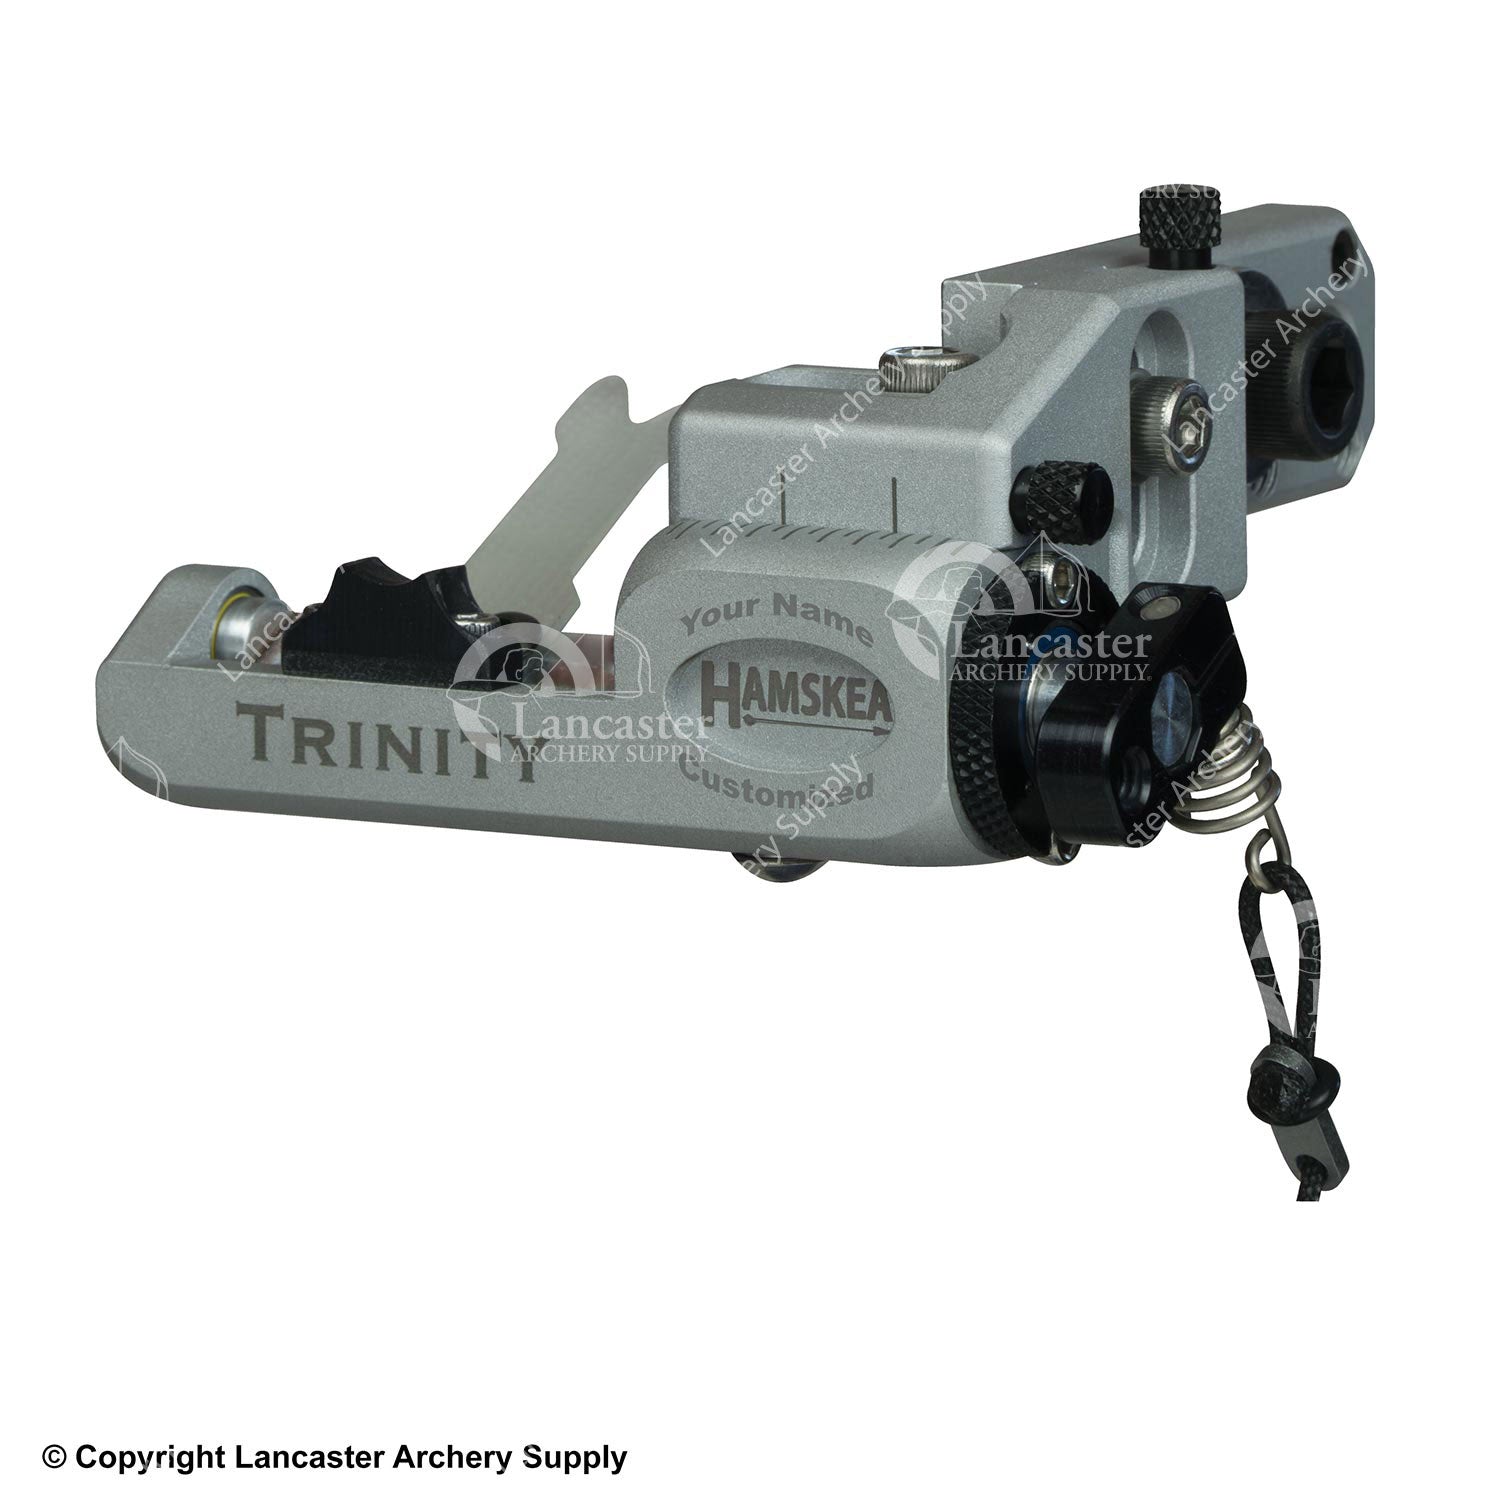 Hamskea Trinity Target Pro Custom Engraved Arrow Rest